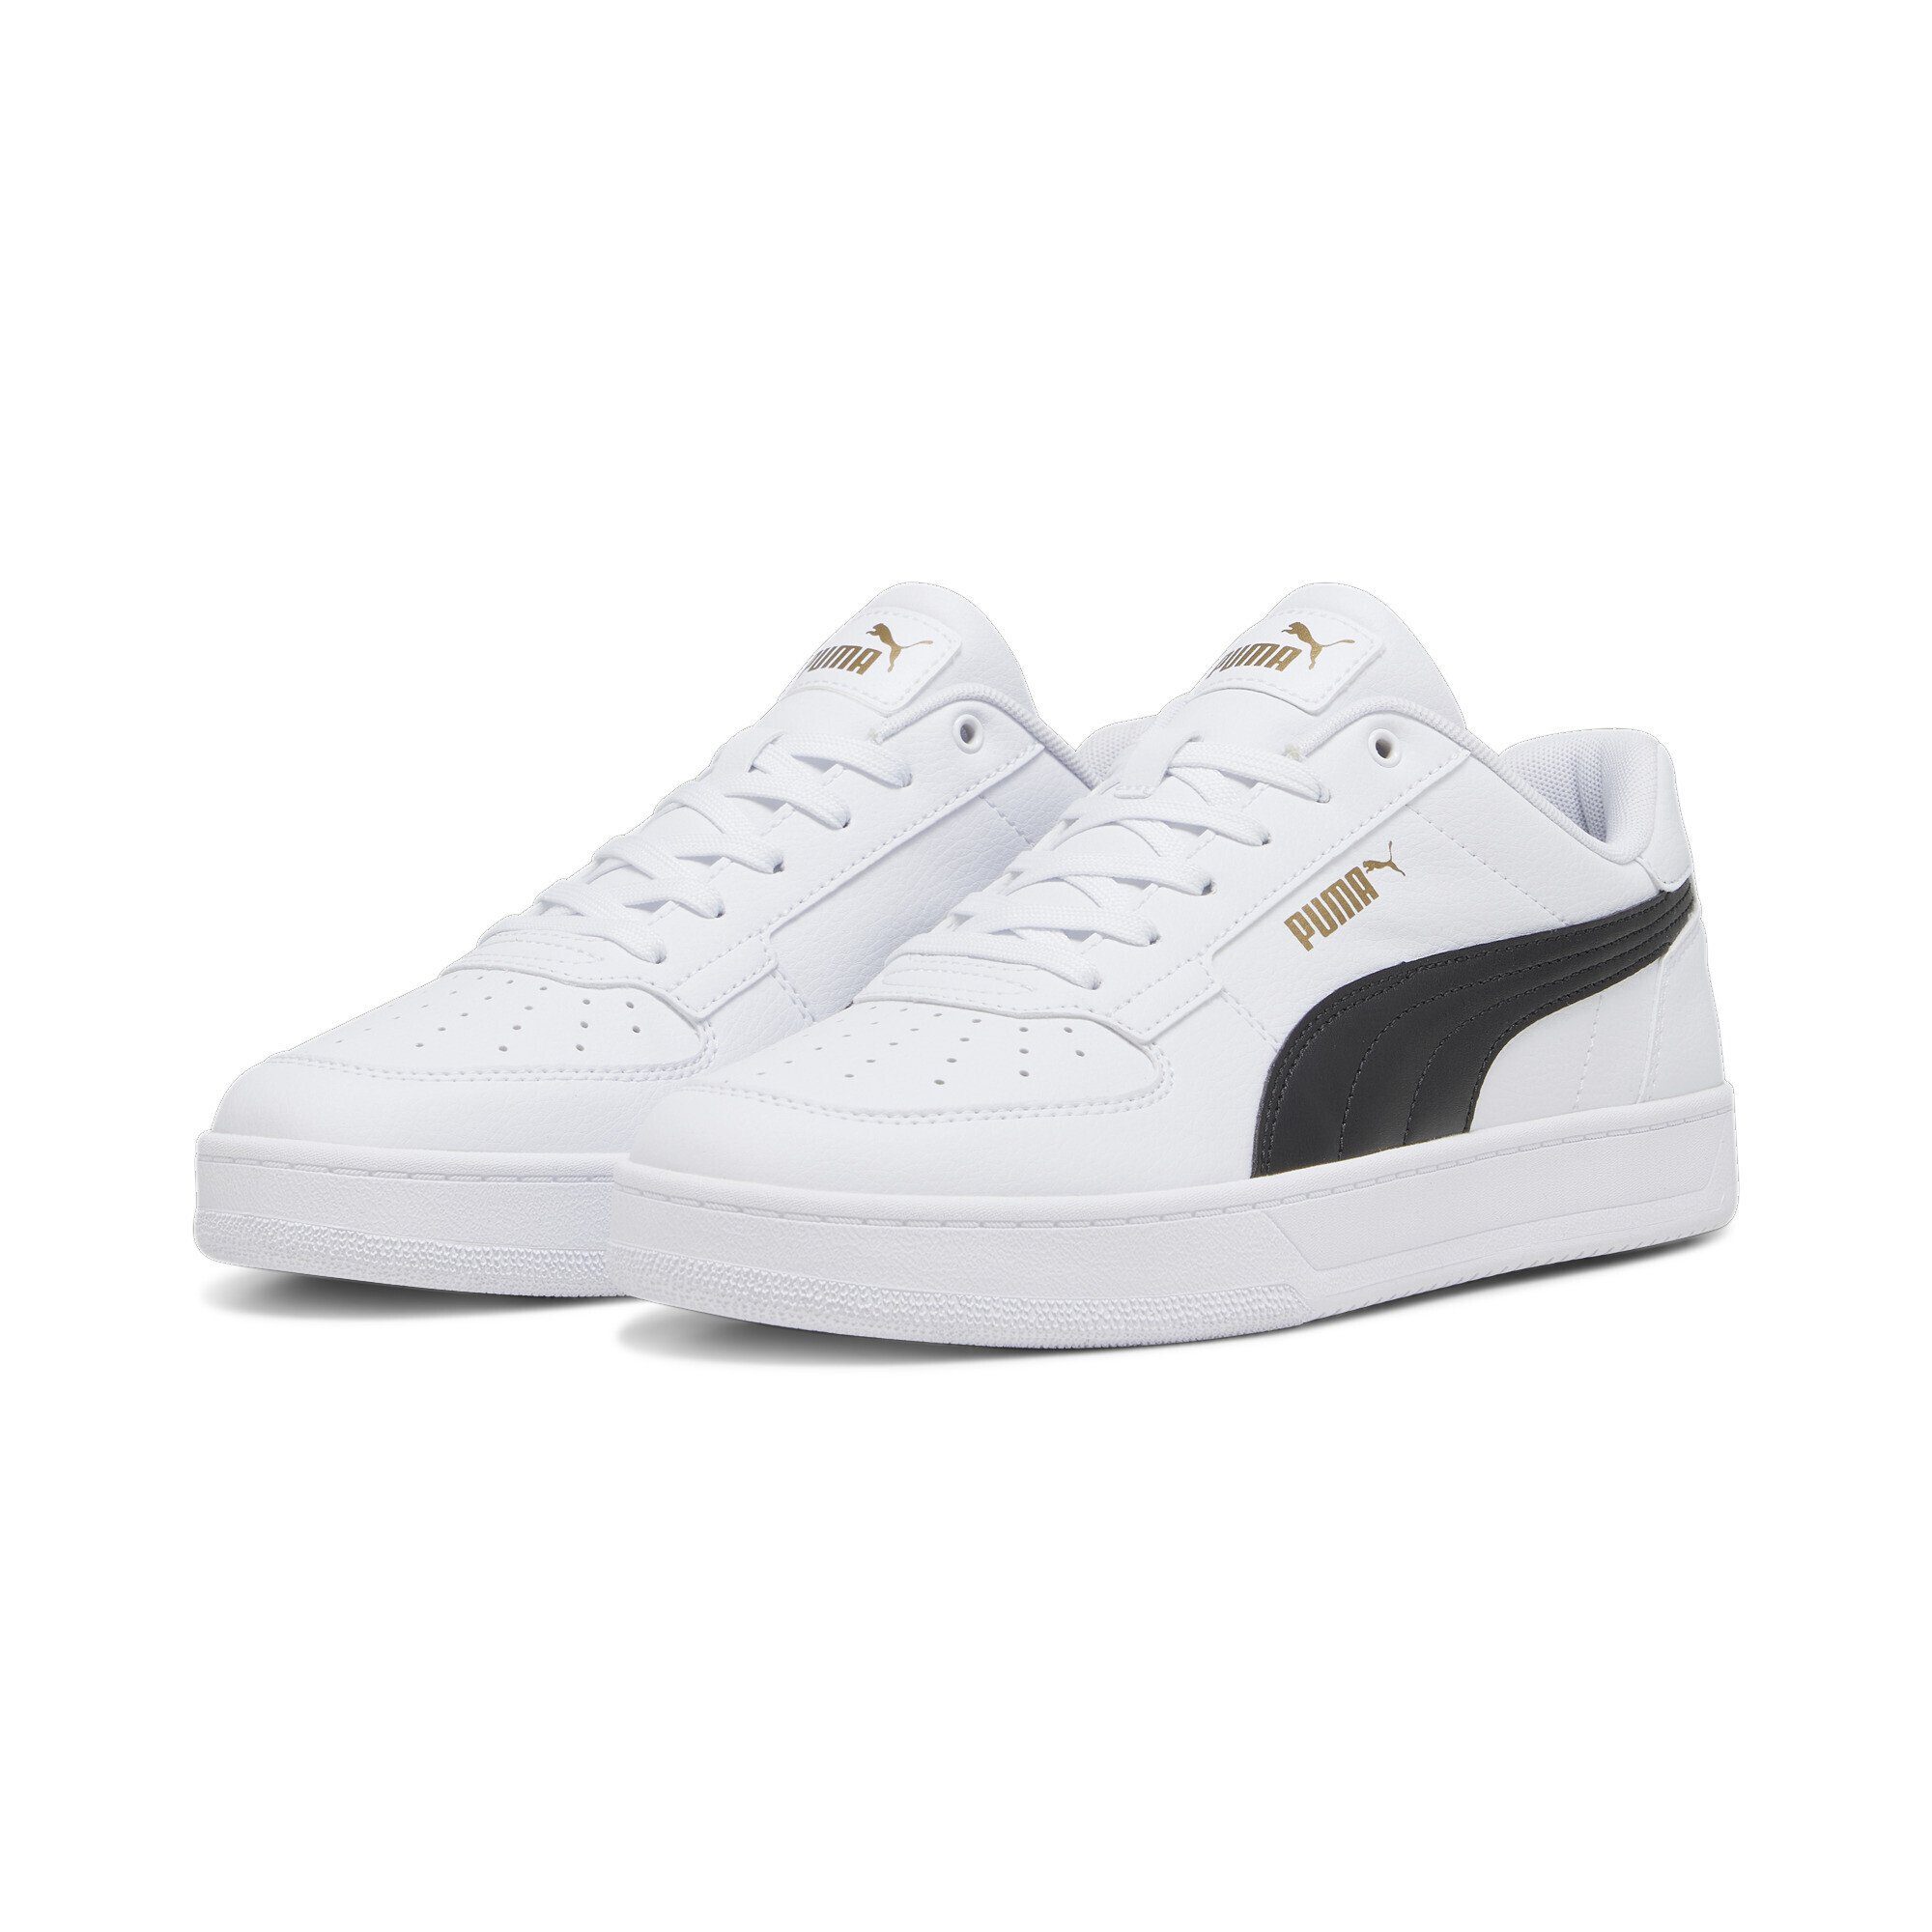 PUMA Caven 2.0 Sneakers White Gold Erwachsene Black Sneaker